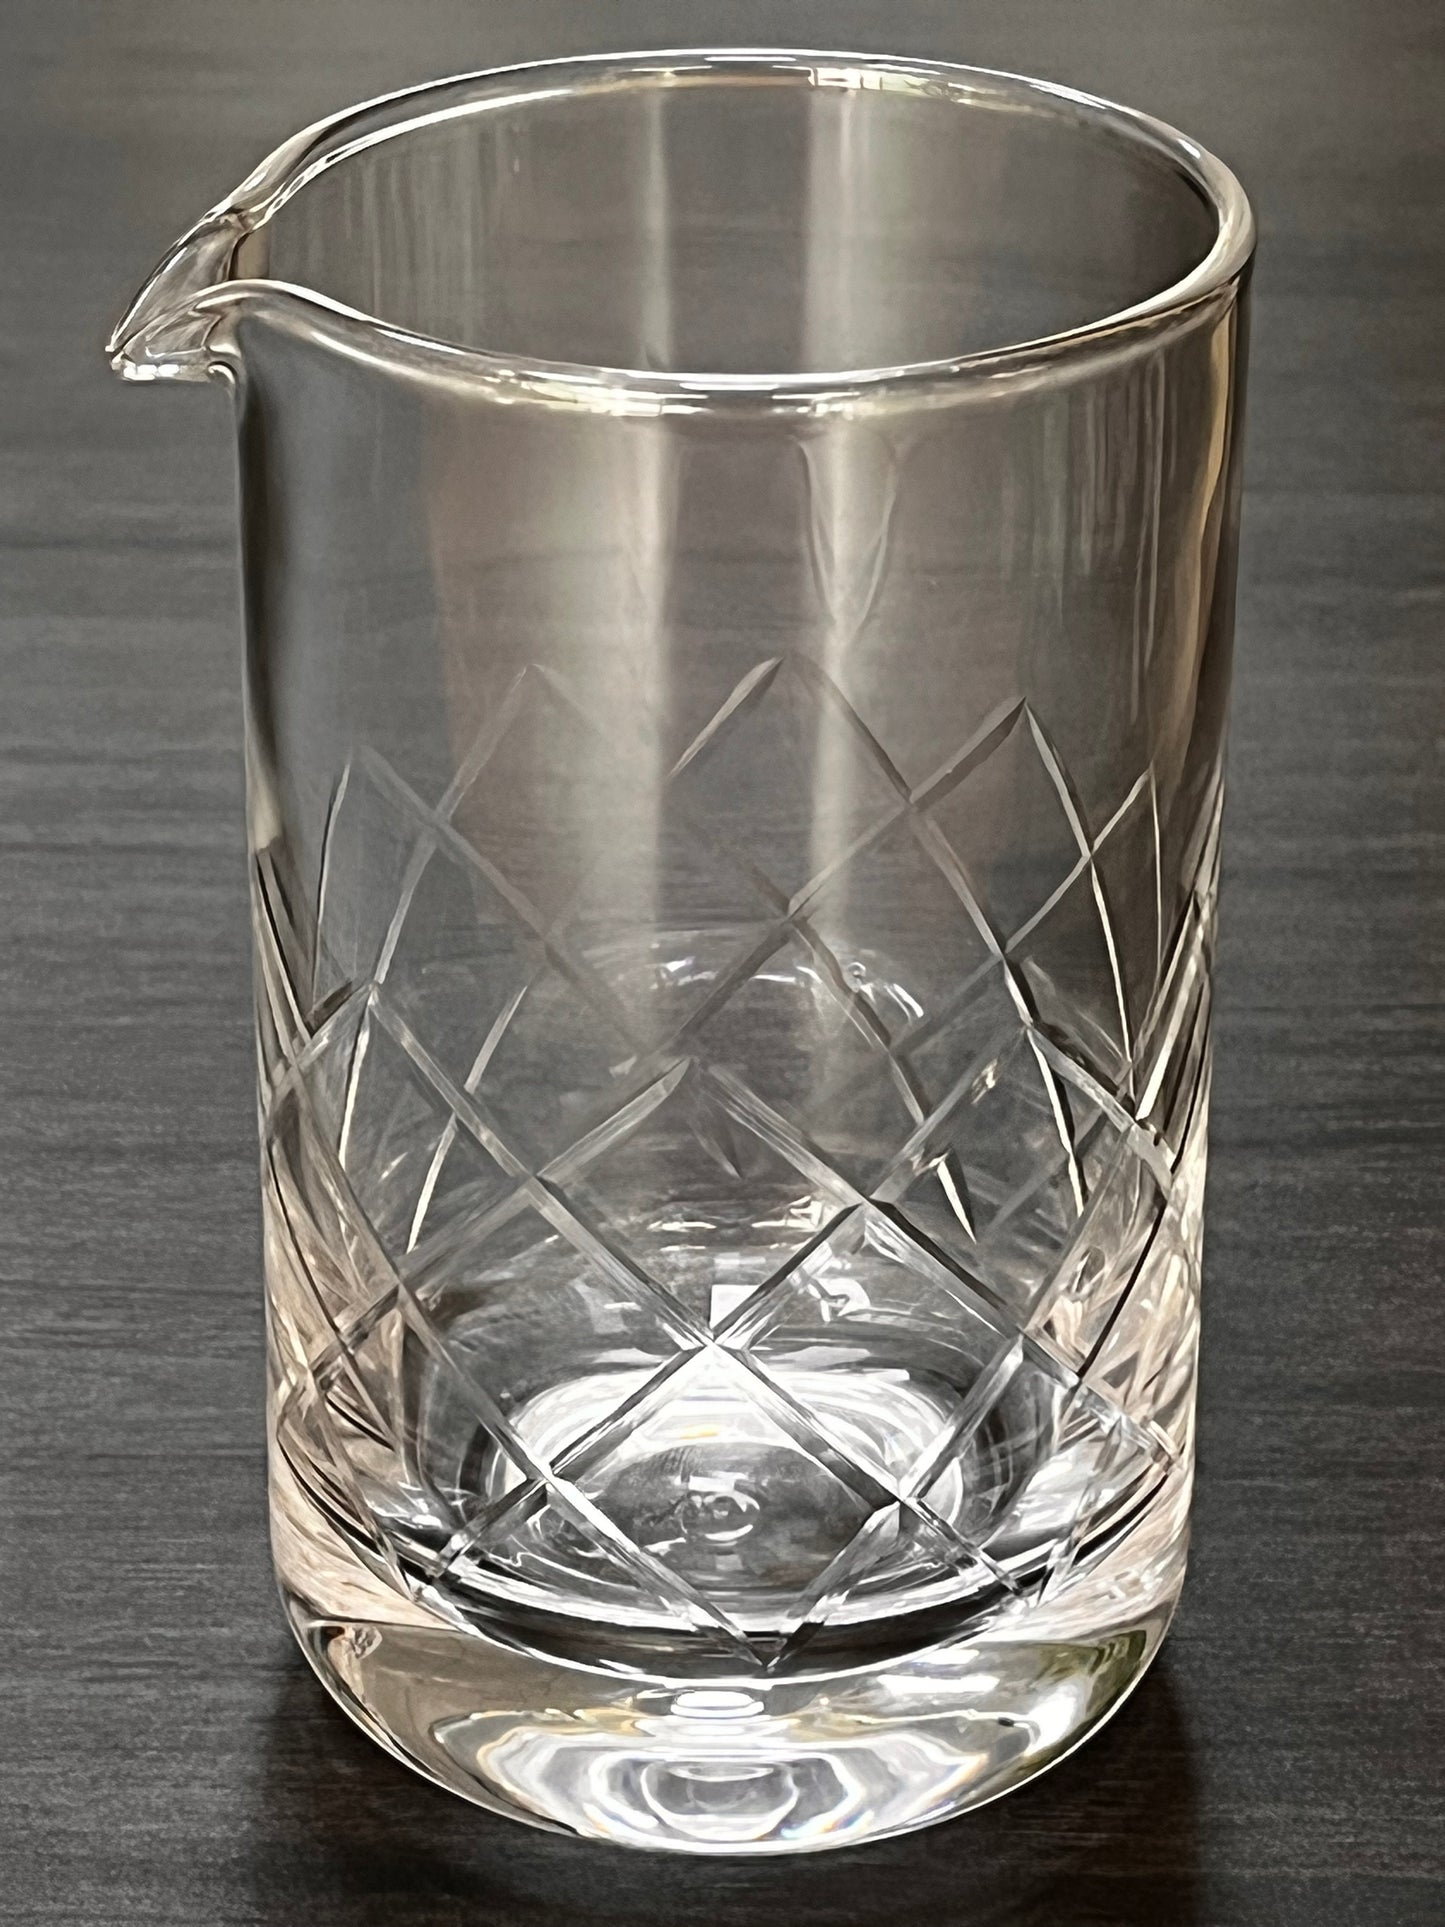 AnlarVo 550 Milliliter Professional Grade Mixing Glass